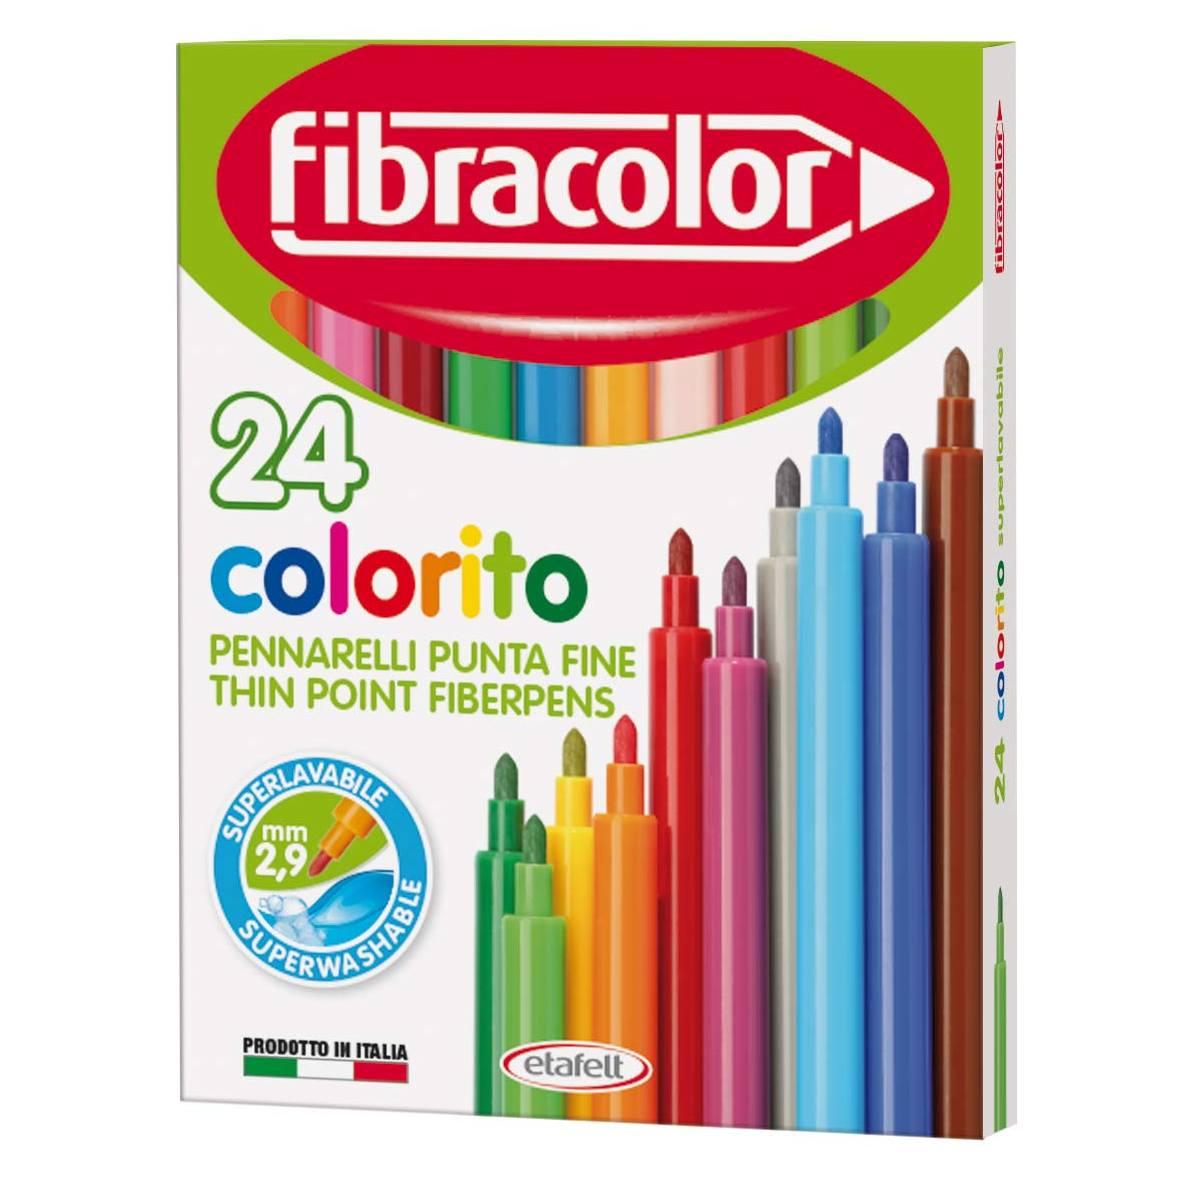 Fibracolor Fibracolor colorito - pennarelli punta fine